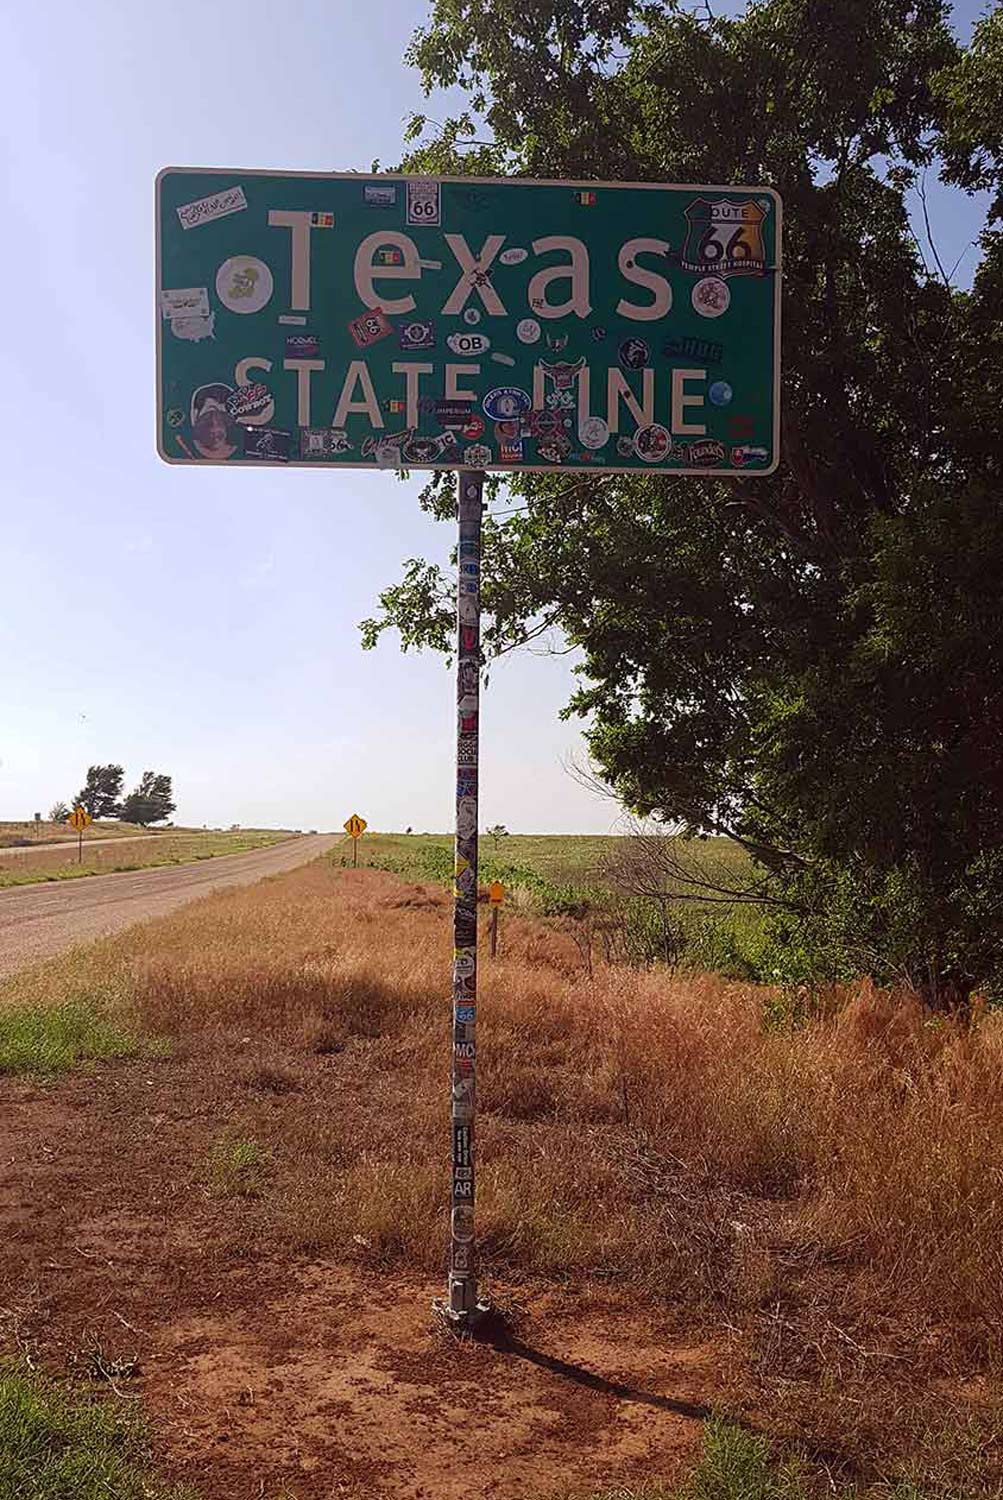 arielkatowice-route-66-texas